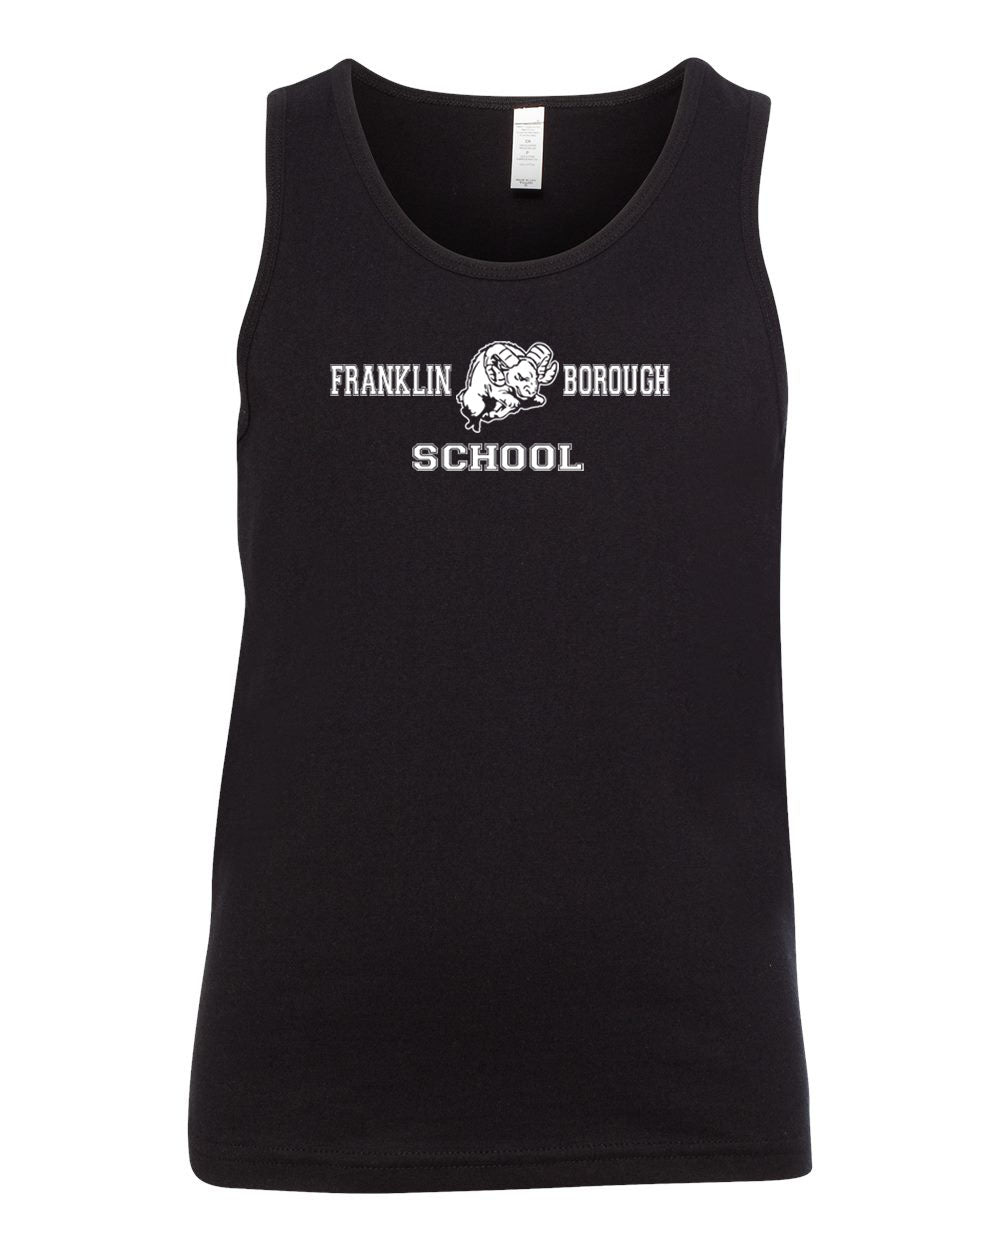 Franklin School design 3 Muscle Tank Top